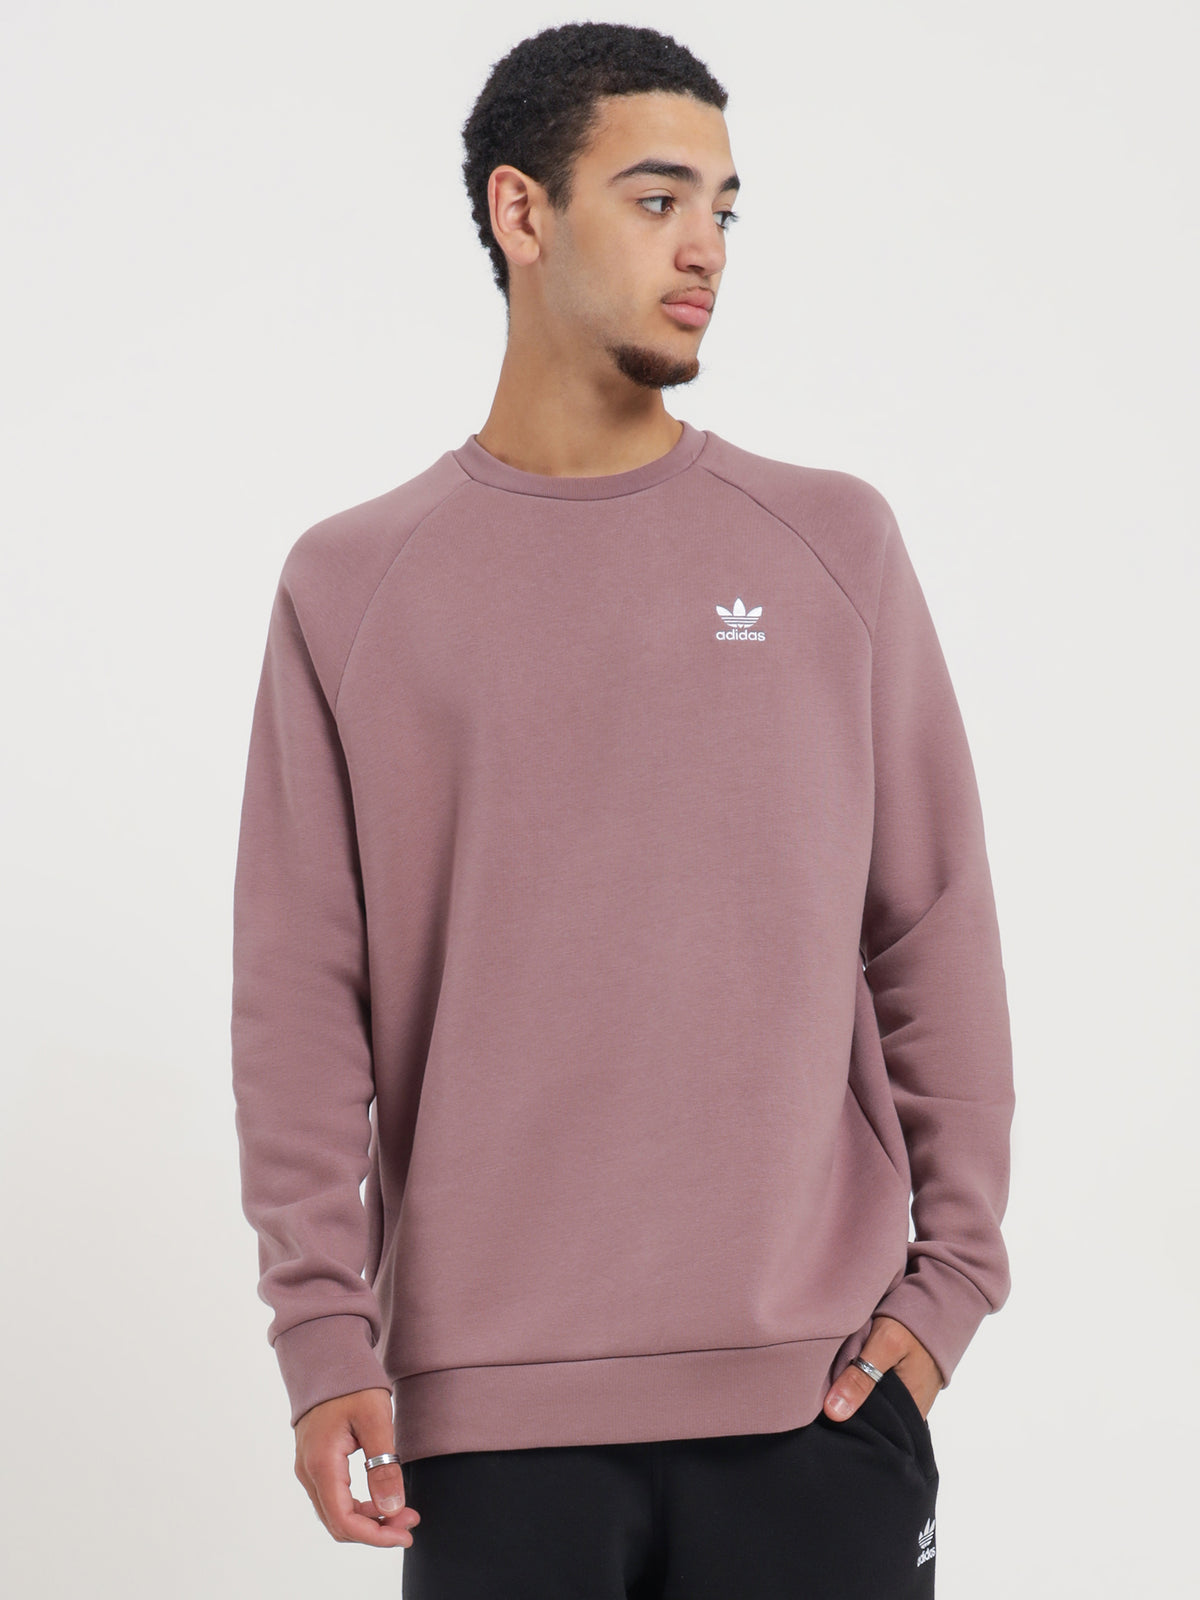 Adicolor Essentials Trefoil Crewneck Sweatshirt in Purple